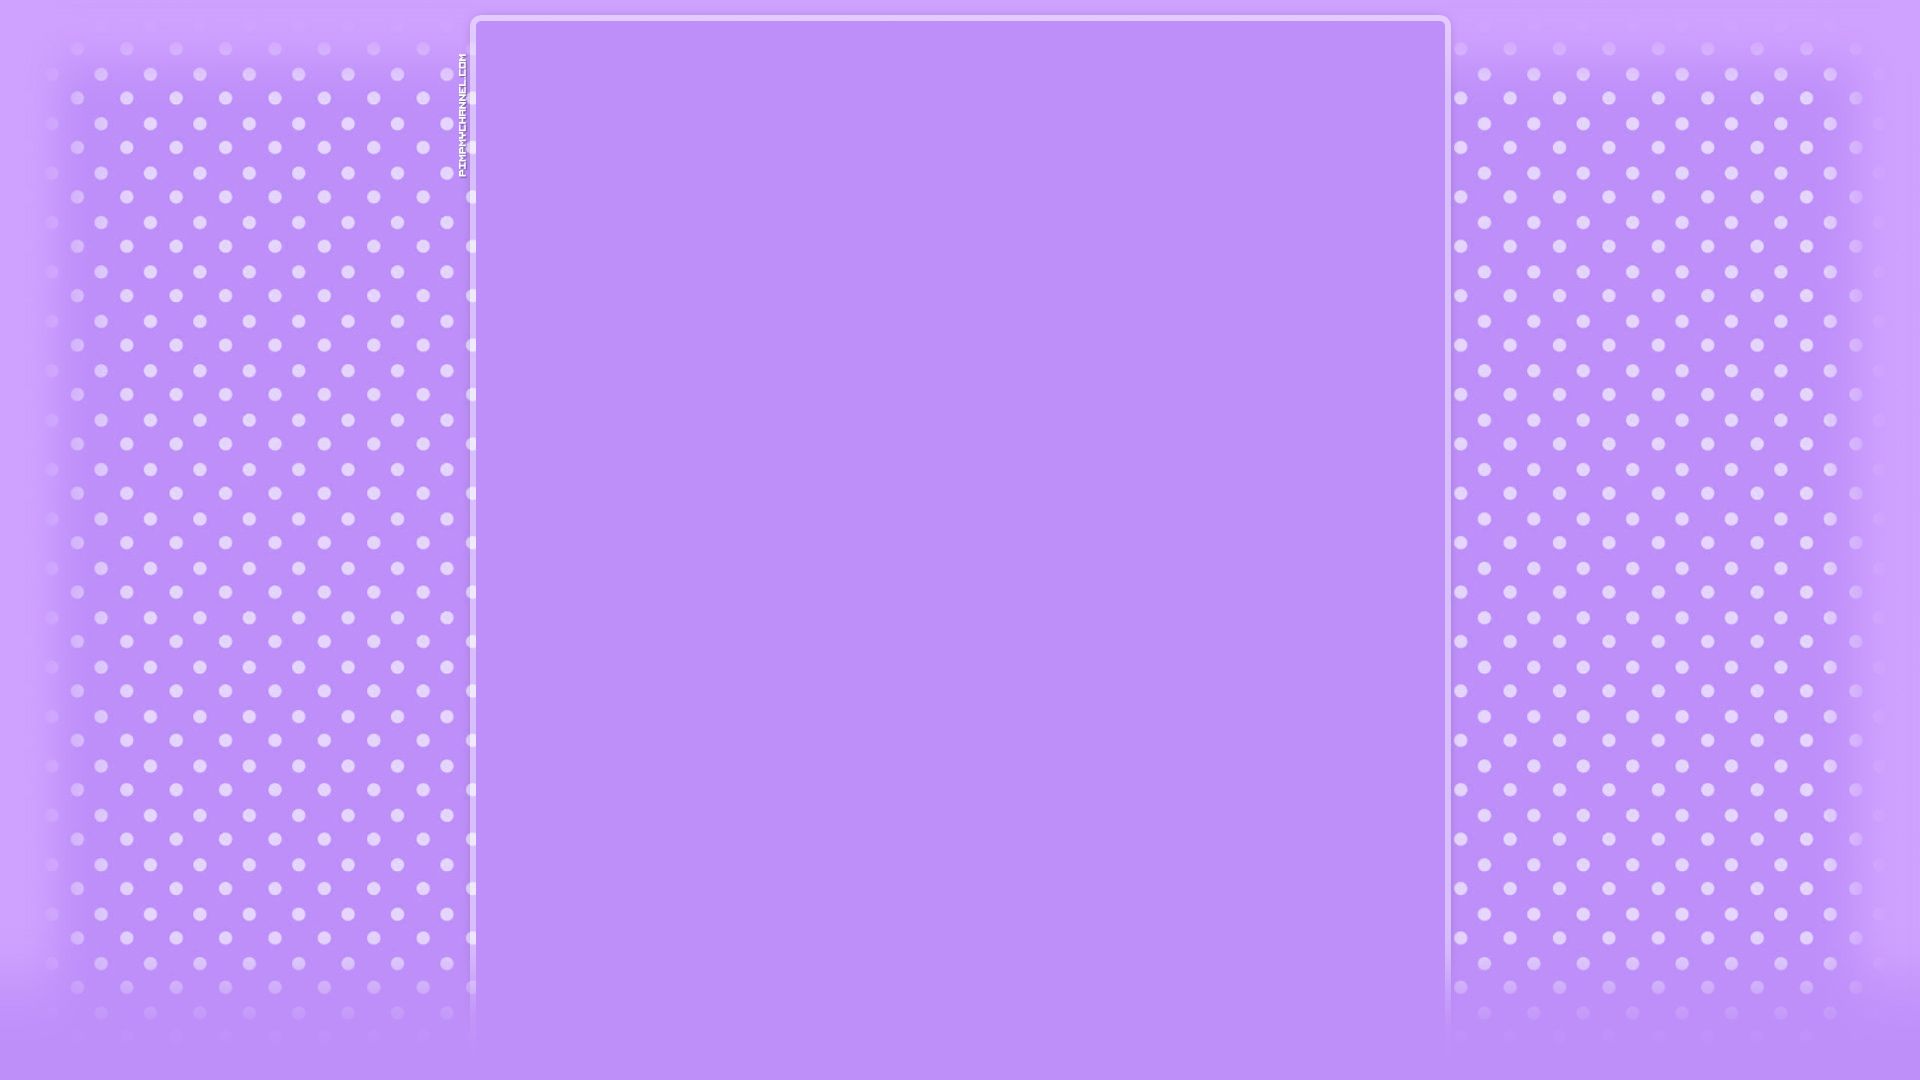 HD wallpaper, Wallpaper, Polka, Backgrounds, Dot, Purple